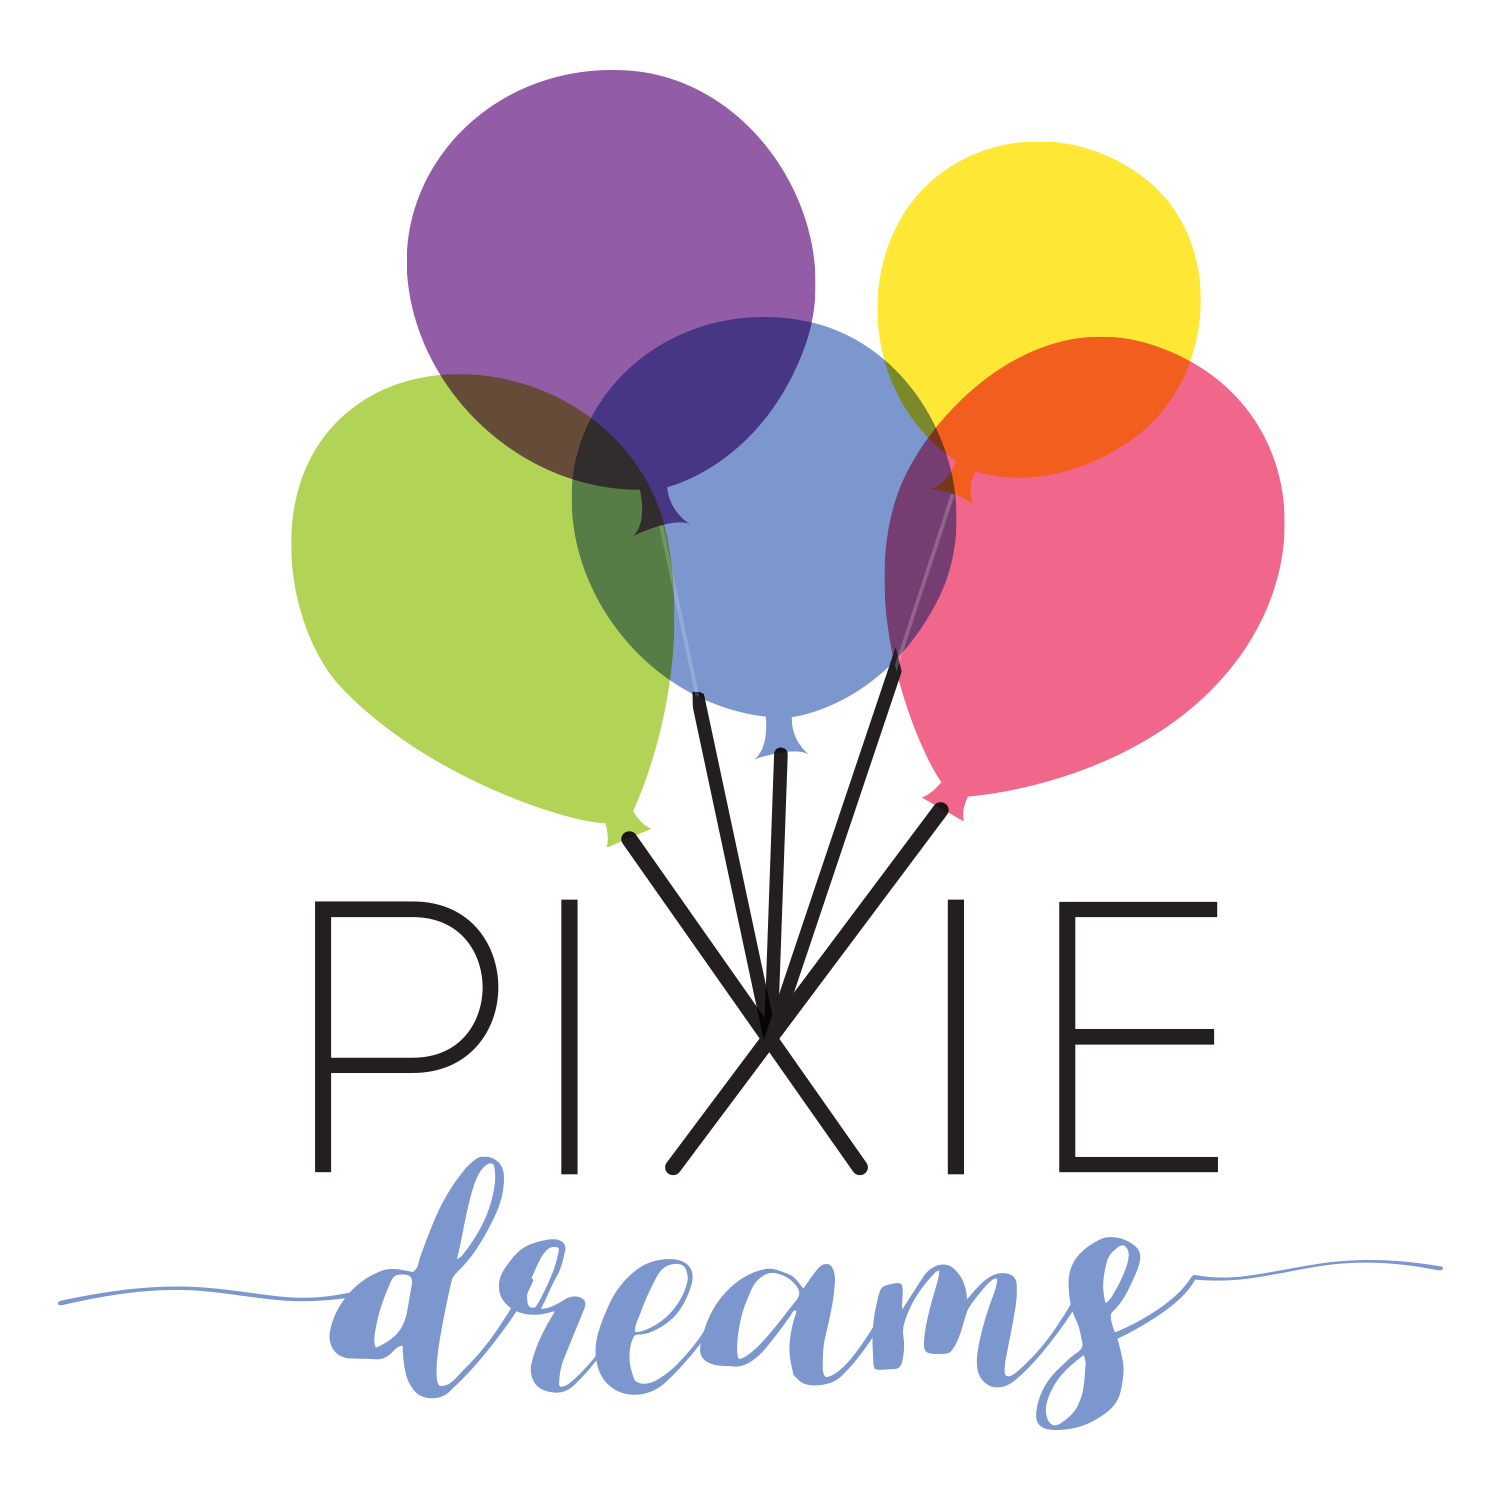 Pixie Dreams